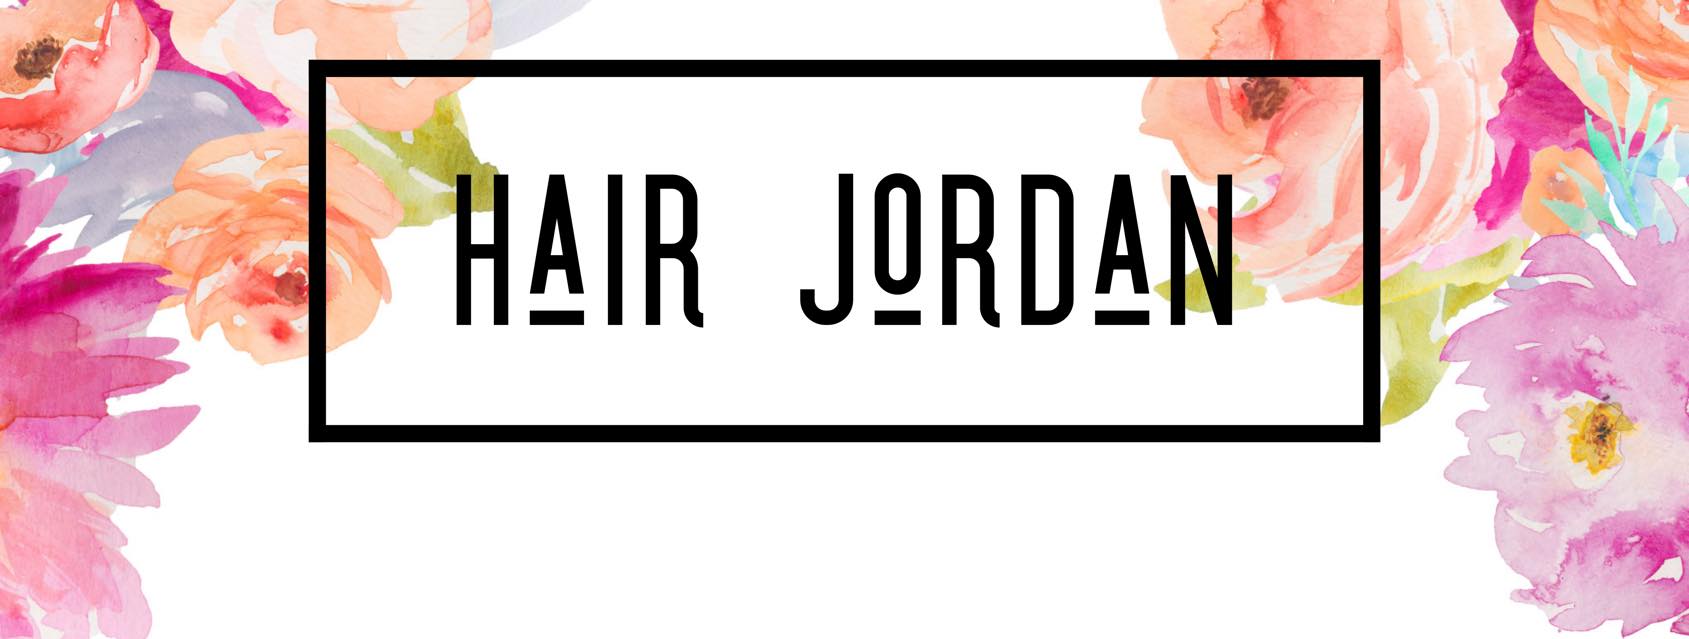 Hair Jordan 146 2nd St NW, Barberton Ohio 44203